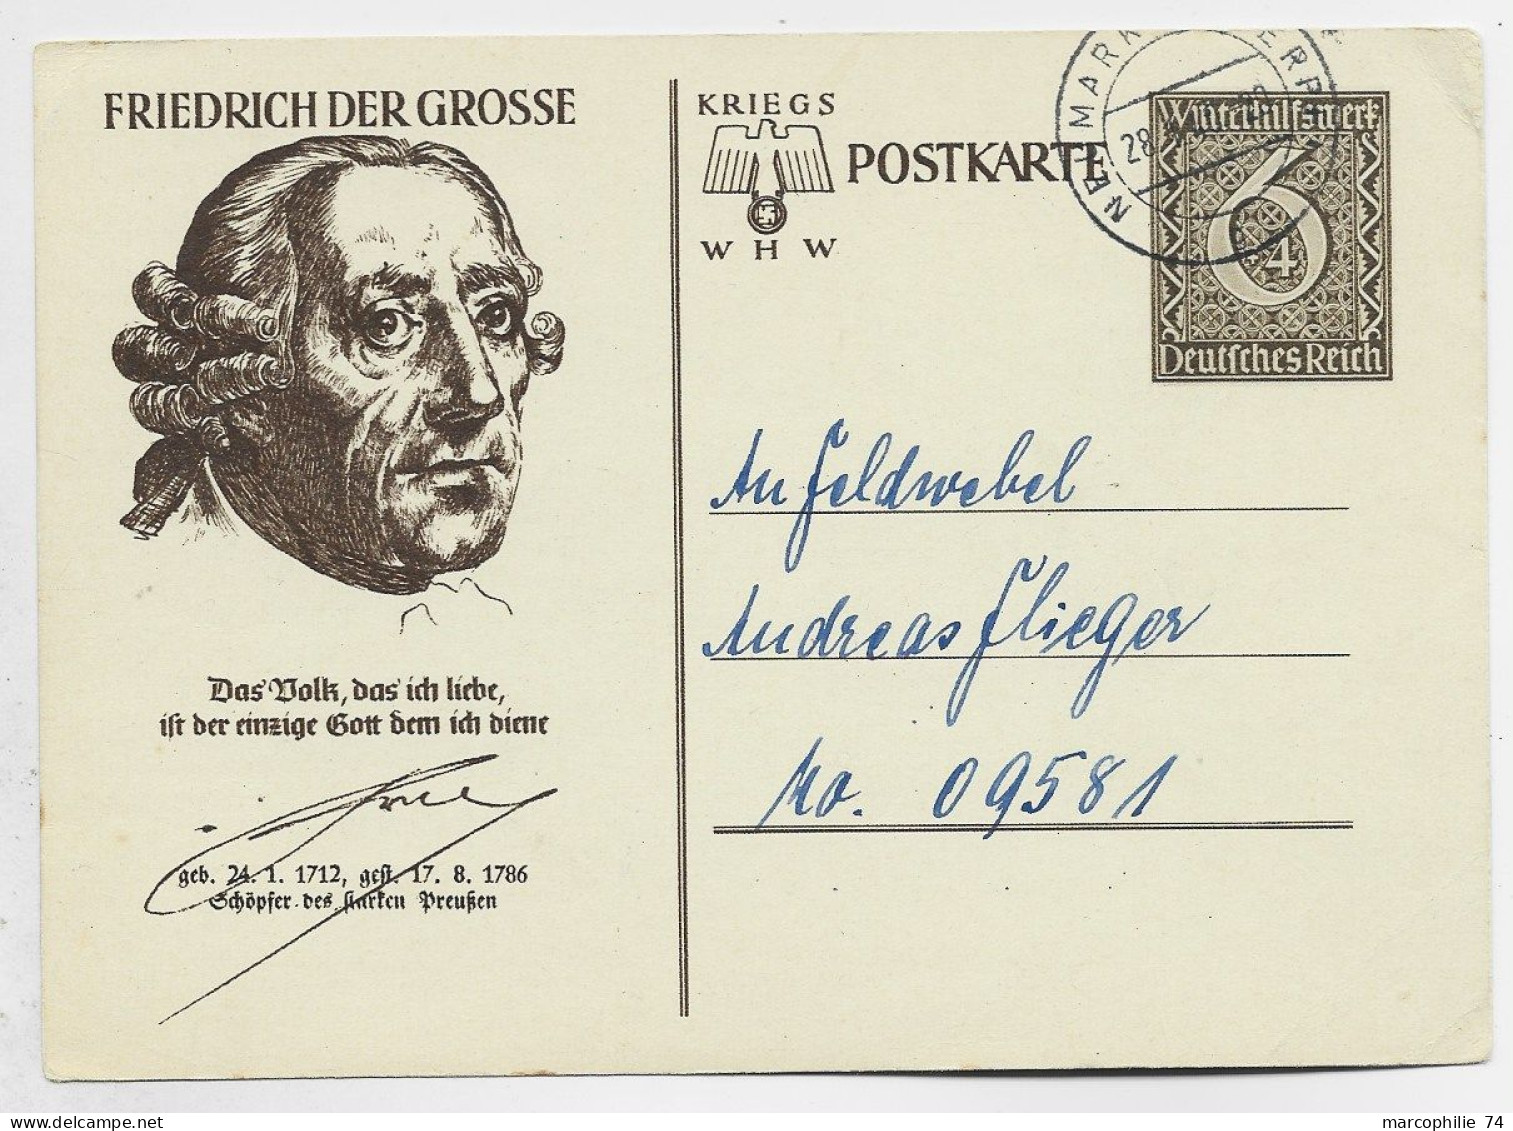 GERMANY REICH ENTIER 6C POSTKARTE FRIEDRICH GROSSE 28.1.1940 TO N°09581 - Postkarten